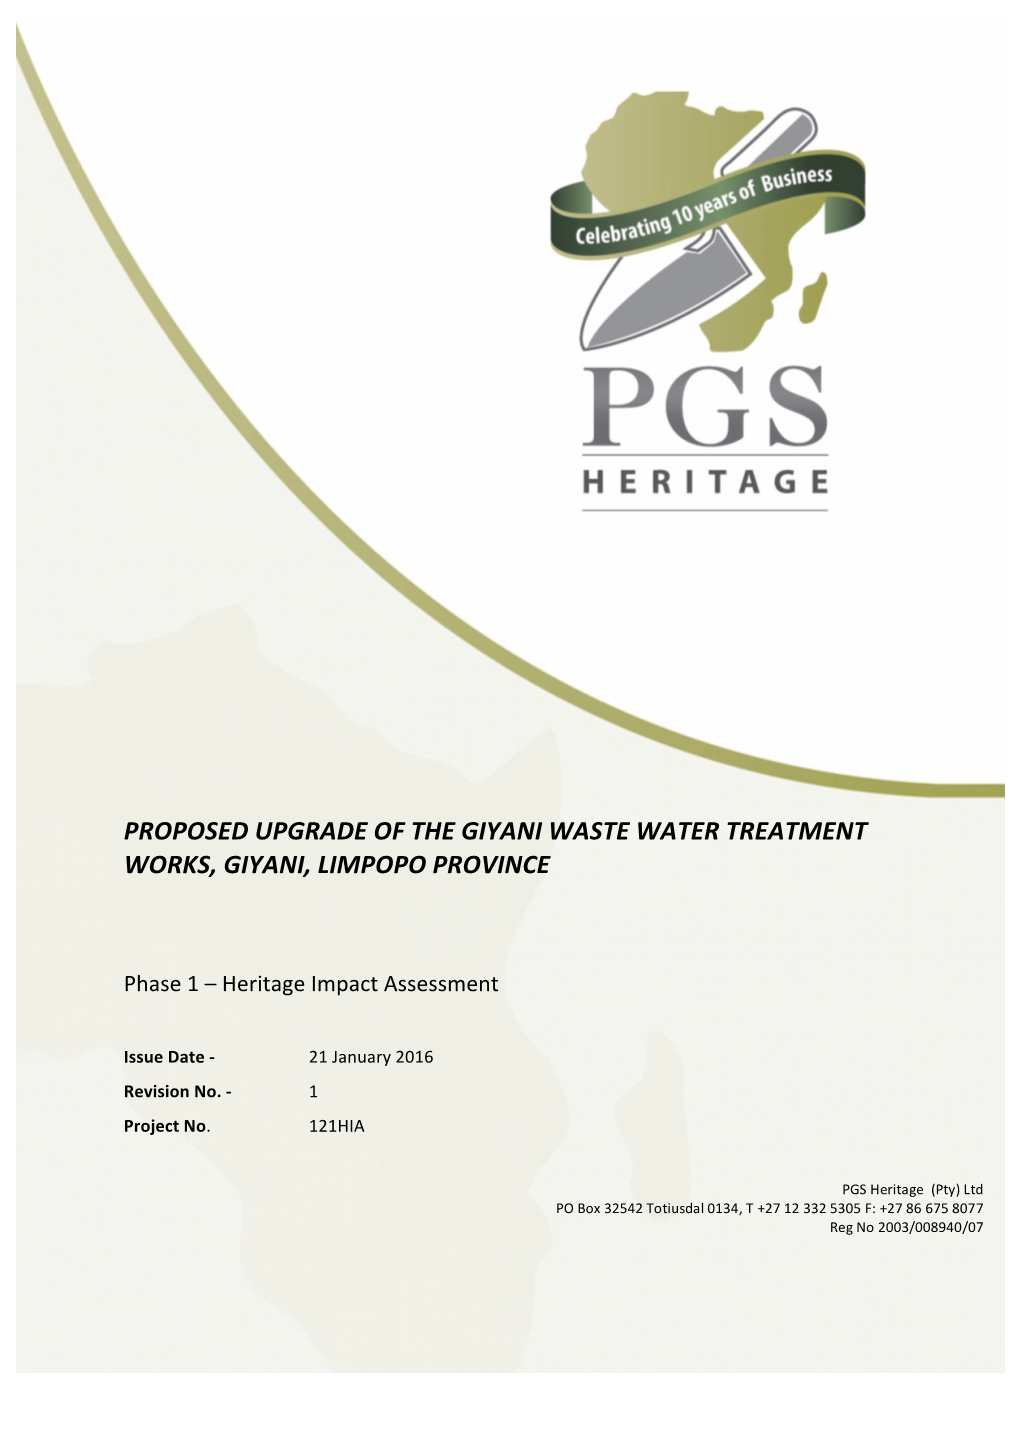 Proposed Upgrade of the Giyani Waste Water Treatment Works, Giyani, Limpopo Province